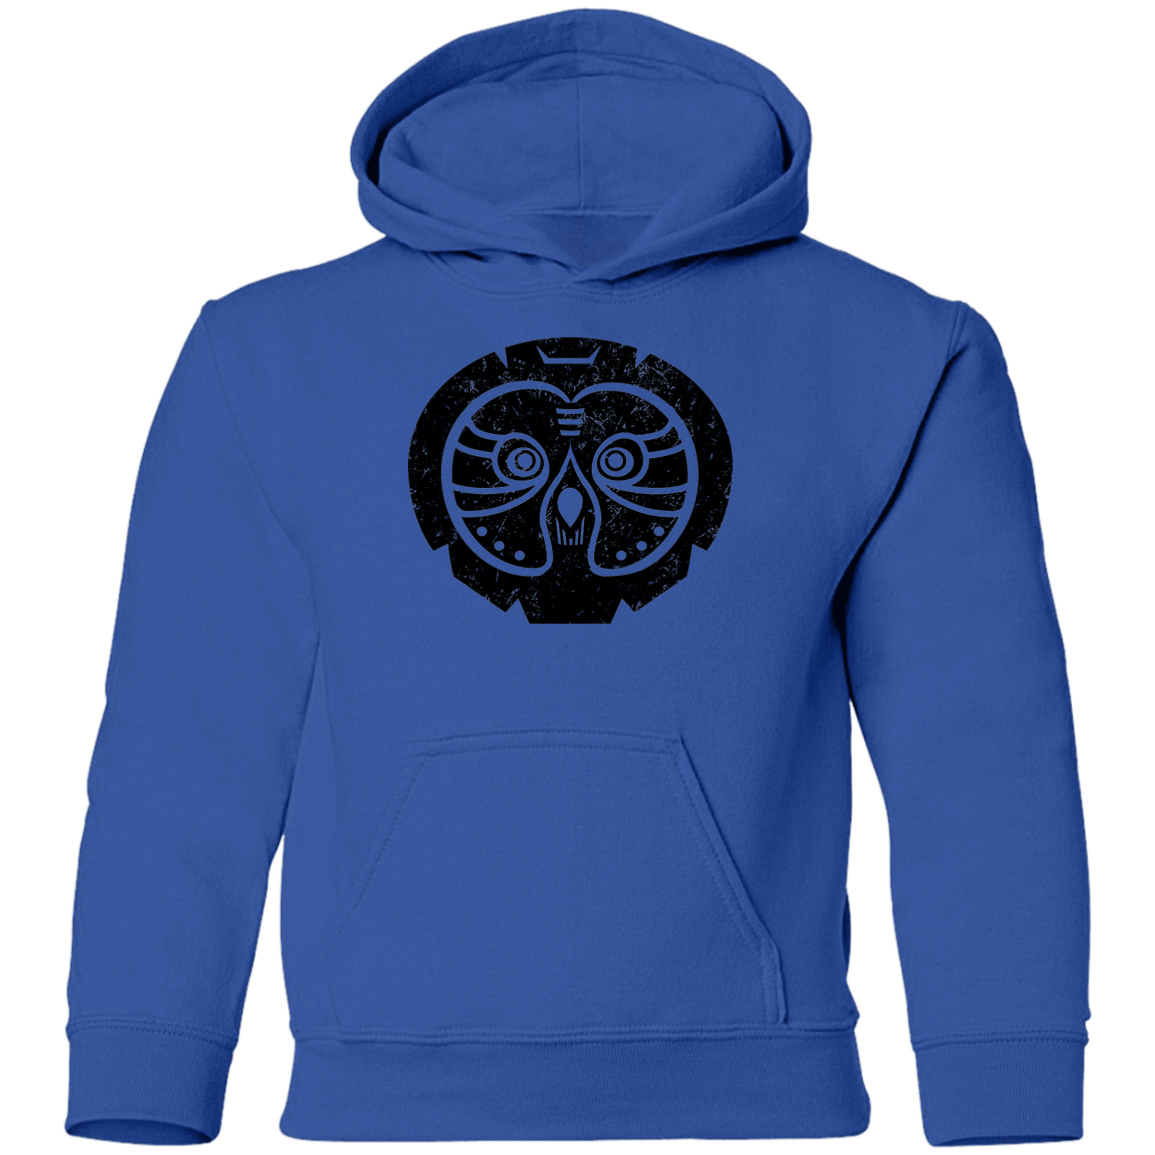 Black Distressed Emblem Hoodies for Kids (Great Grey Owl/Sage)